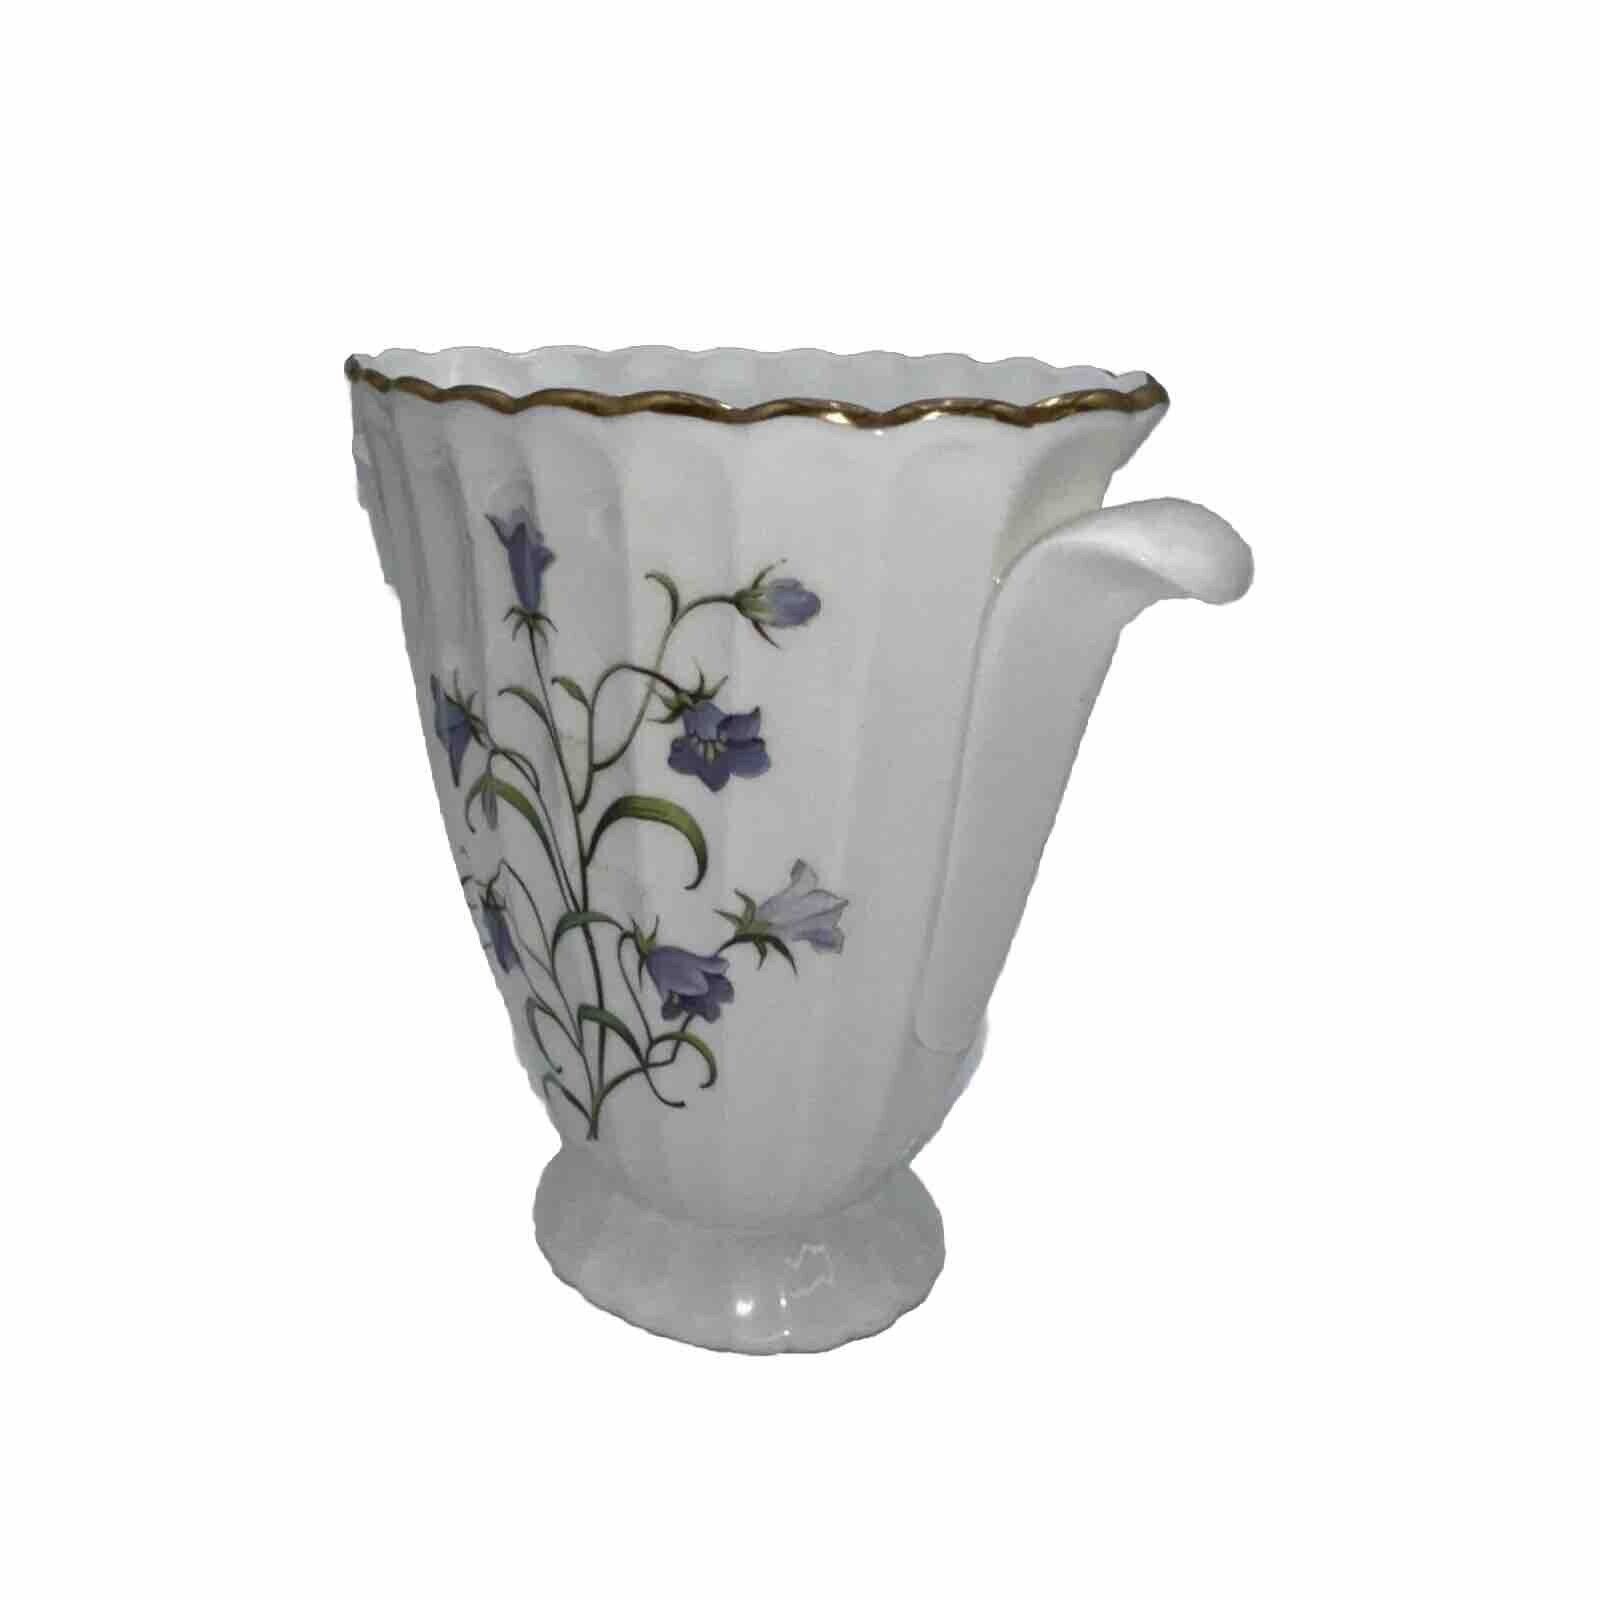 Signed Spode Fine Bone China 5.25” Vase, Lavendar flowers, Pristine Estate piece